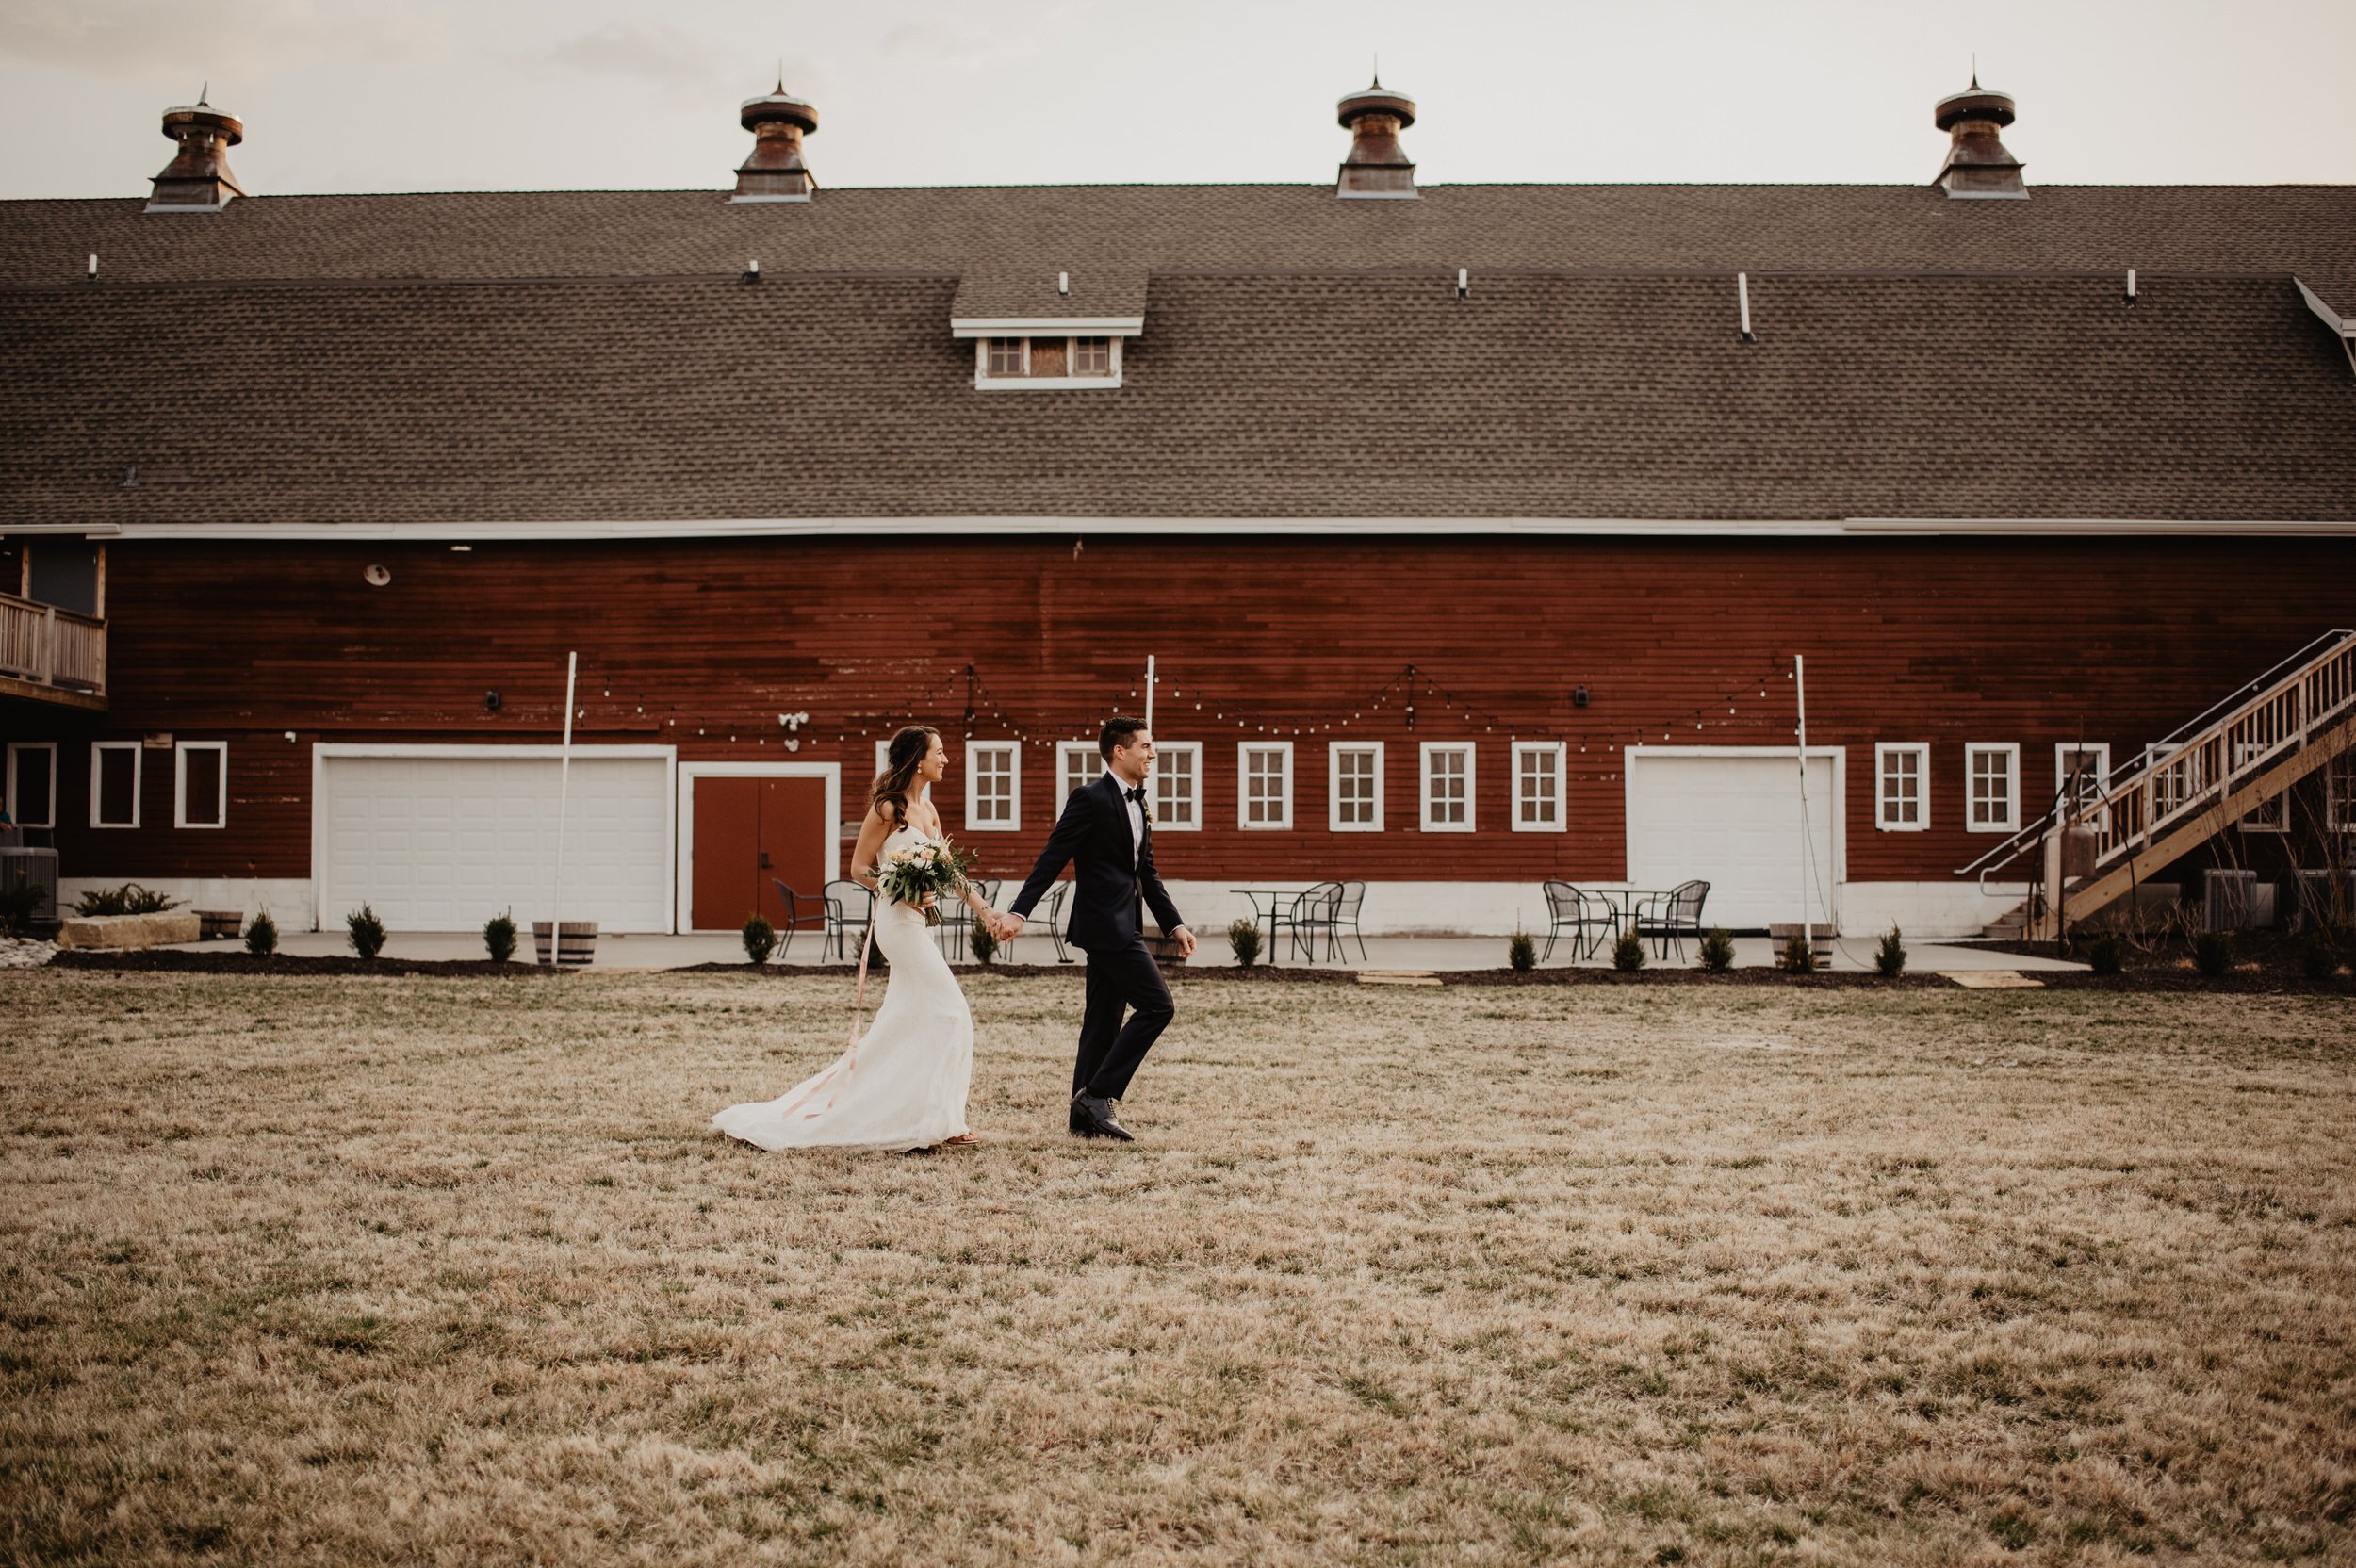 The Barn at the Ackerhurst Dairy Farm Omaha Nebraska Wedding Kaylie Sirek Photography086.jpg